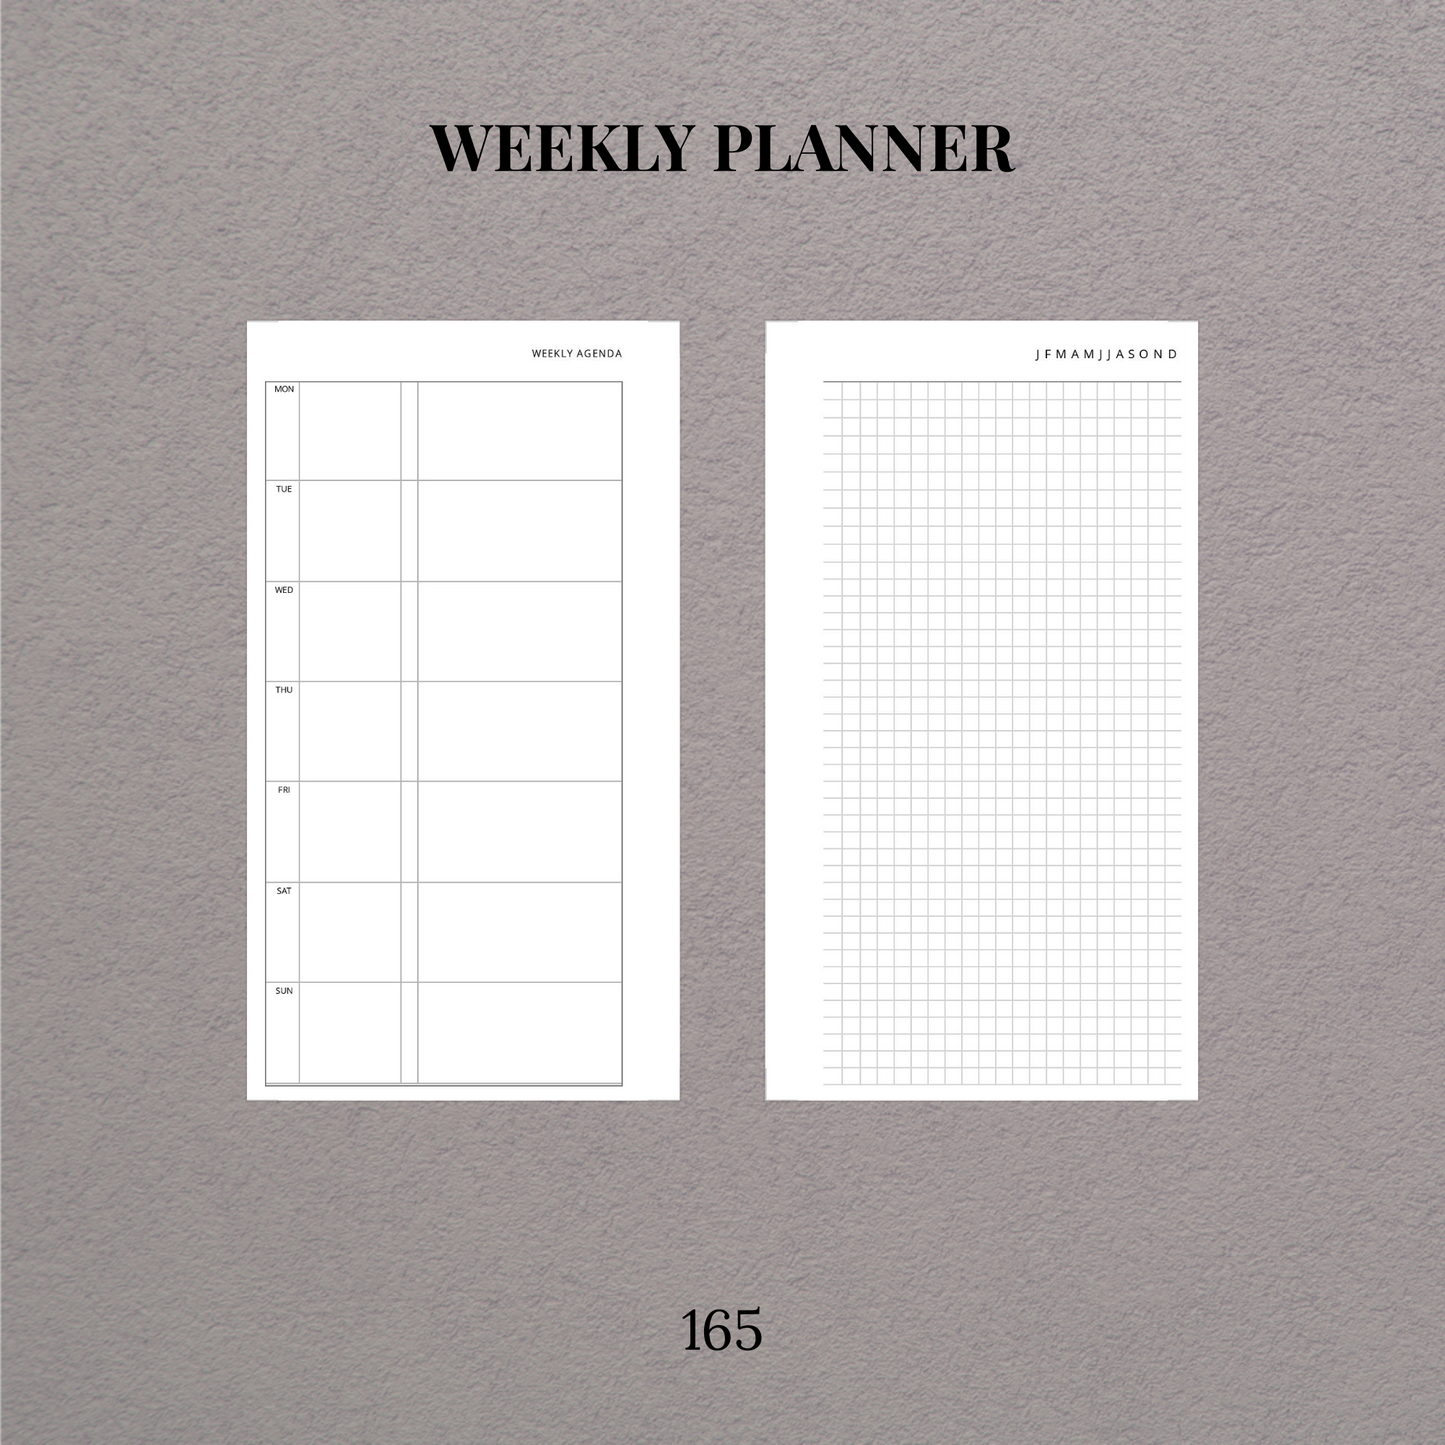 Weekly planner | Printable inserts - 165